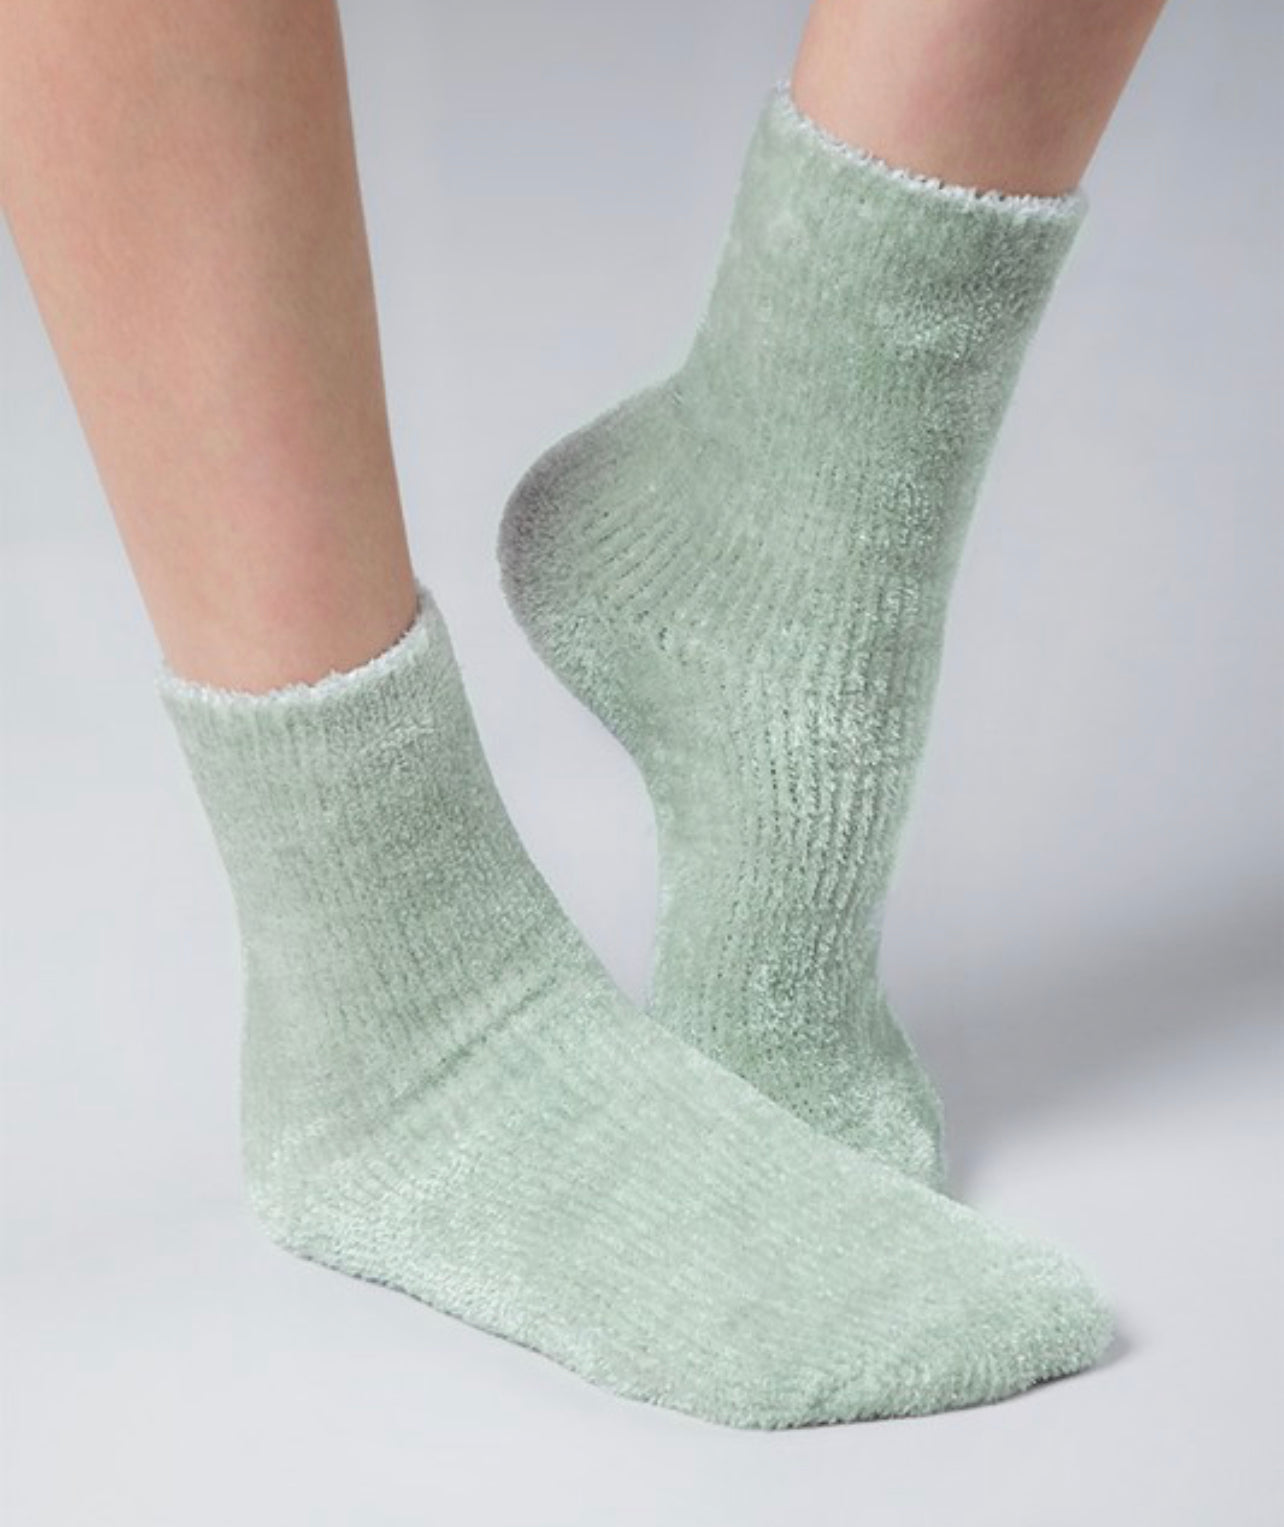 Chenille & Chill Socks in multiple colors